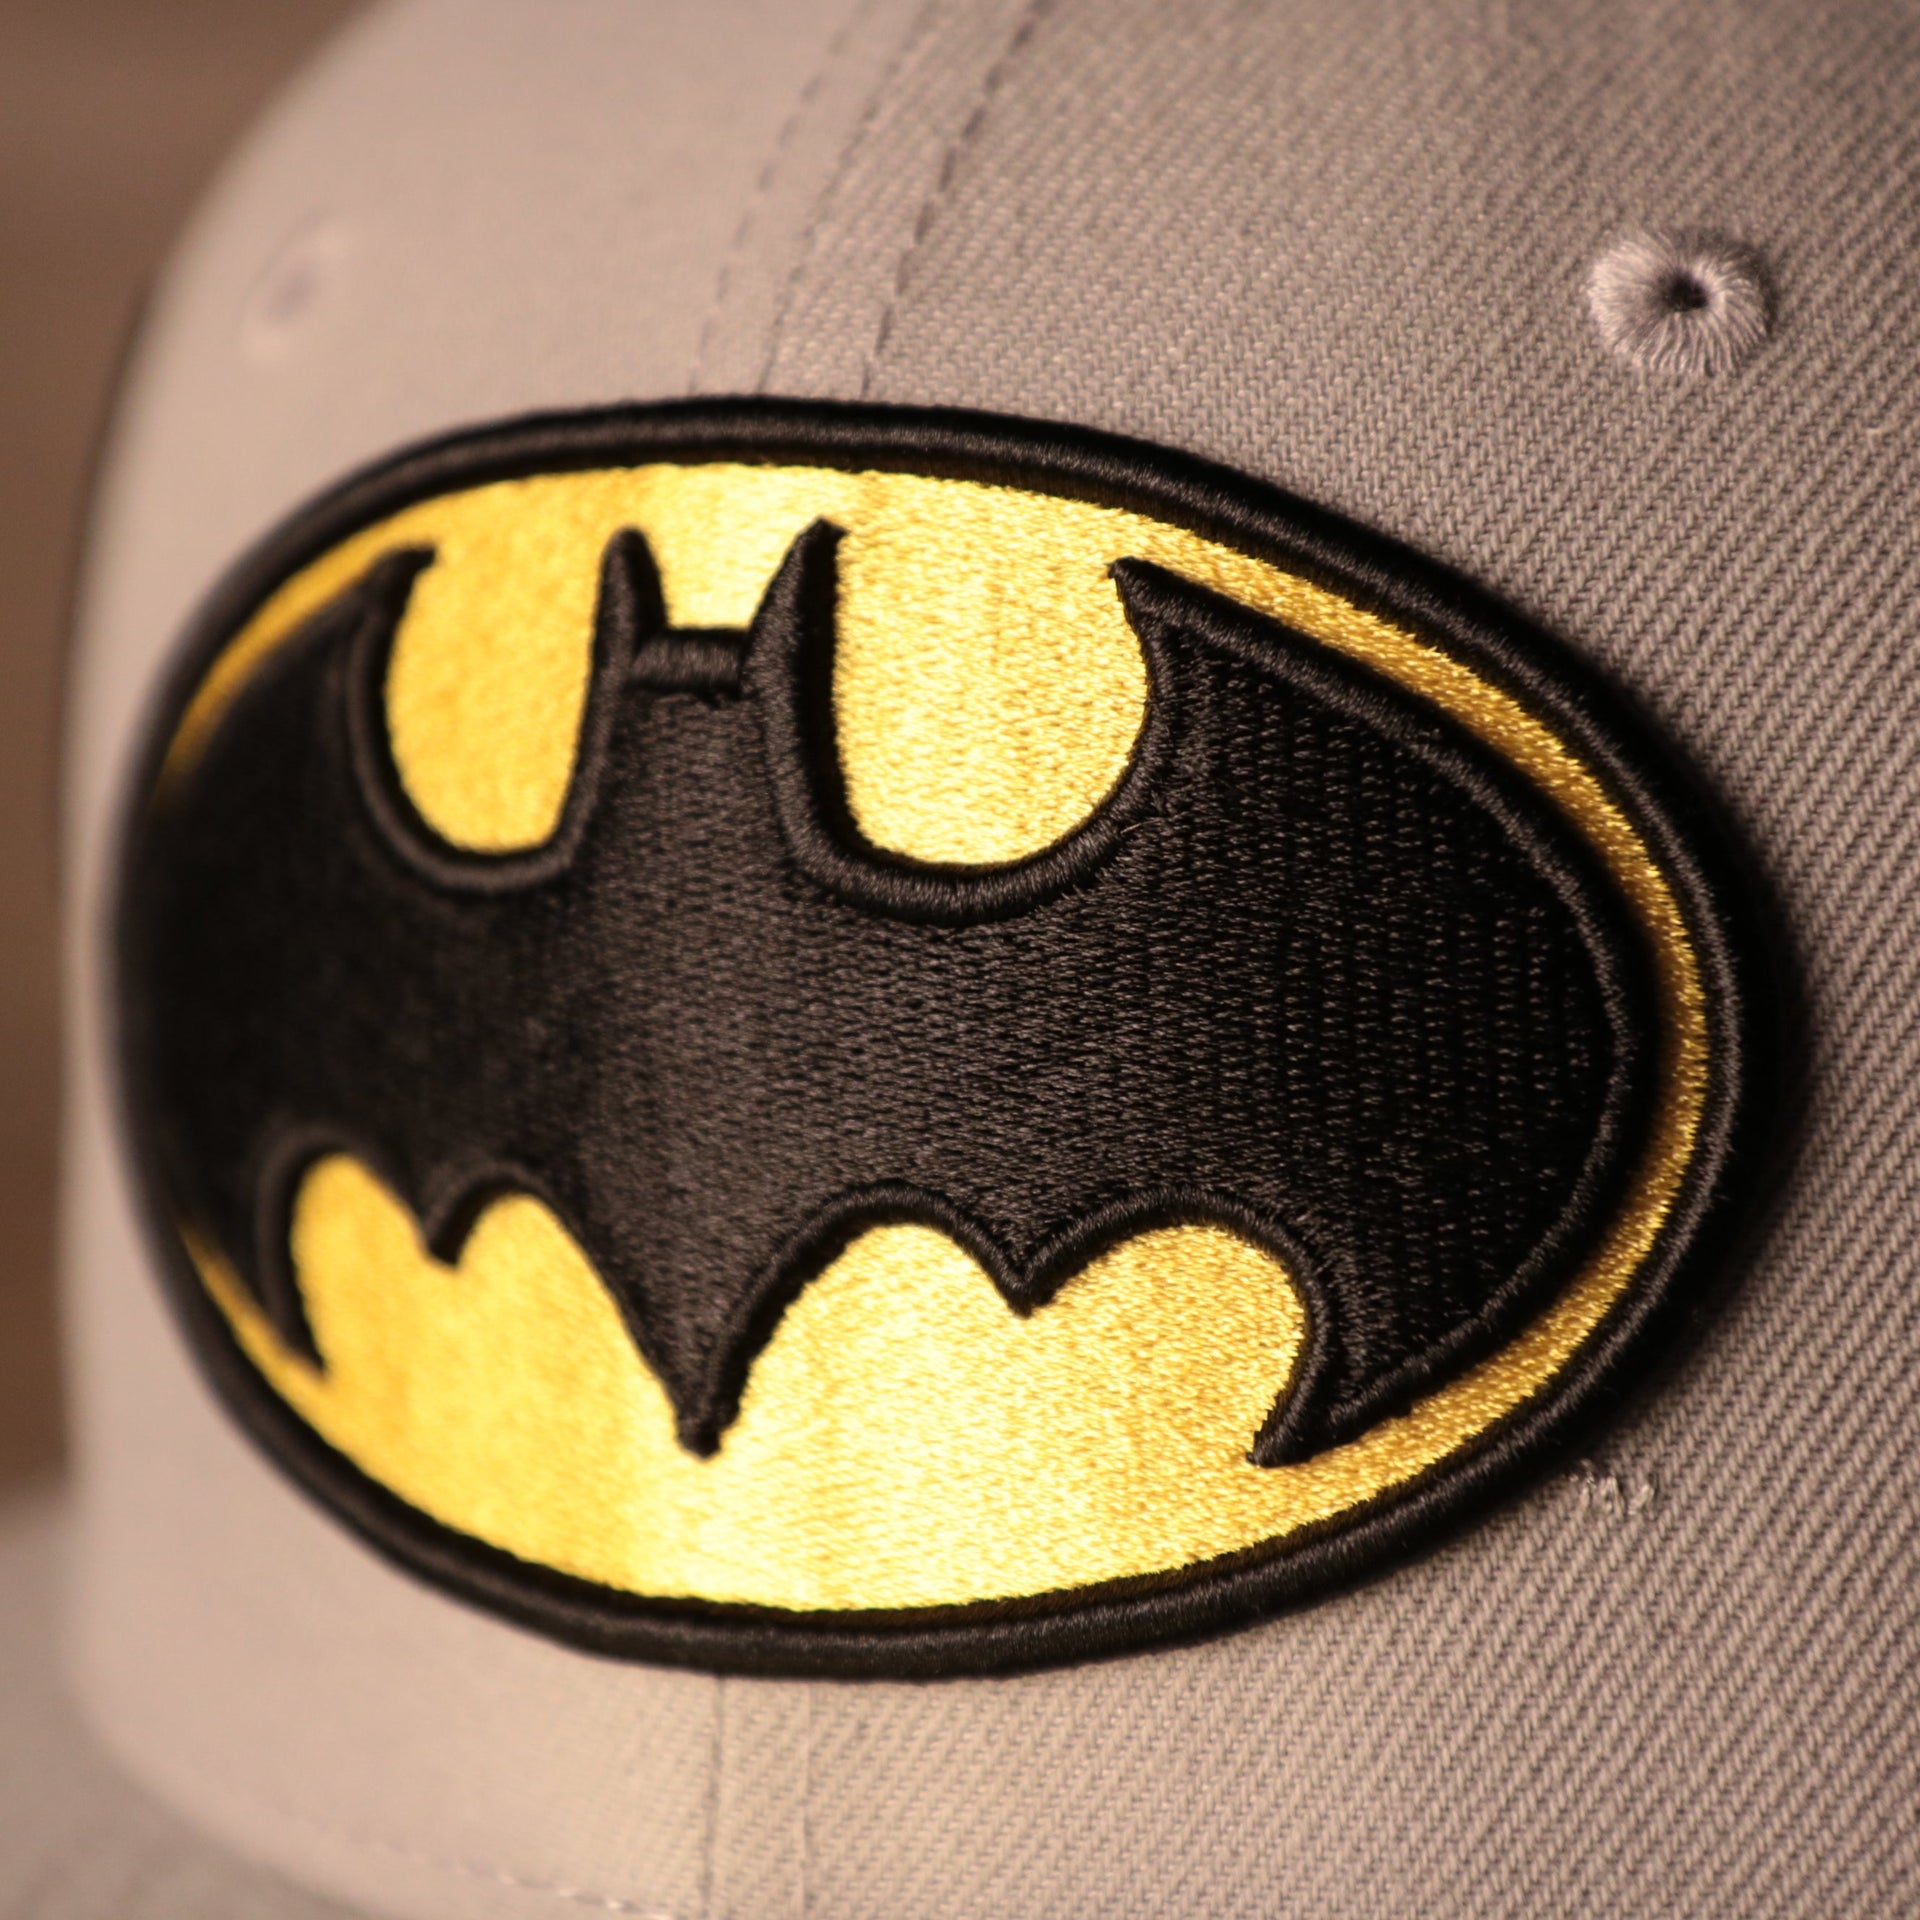 Batman Grey Bottom Fitted Cap | Batman Superhero Gray Bottom Fitted Hat the batman logo has the batman bat in front of a yellow oval